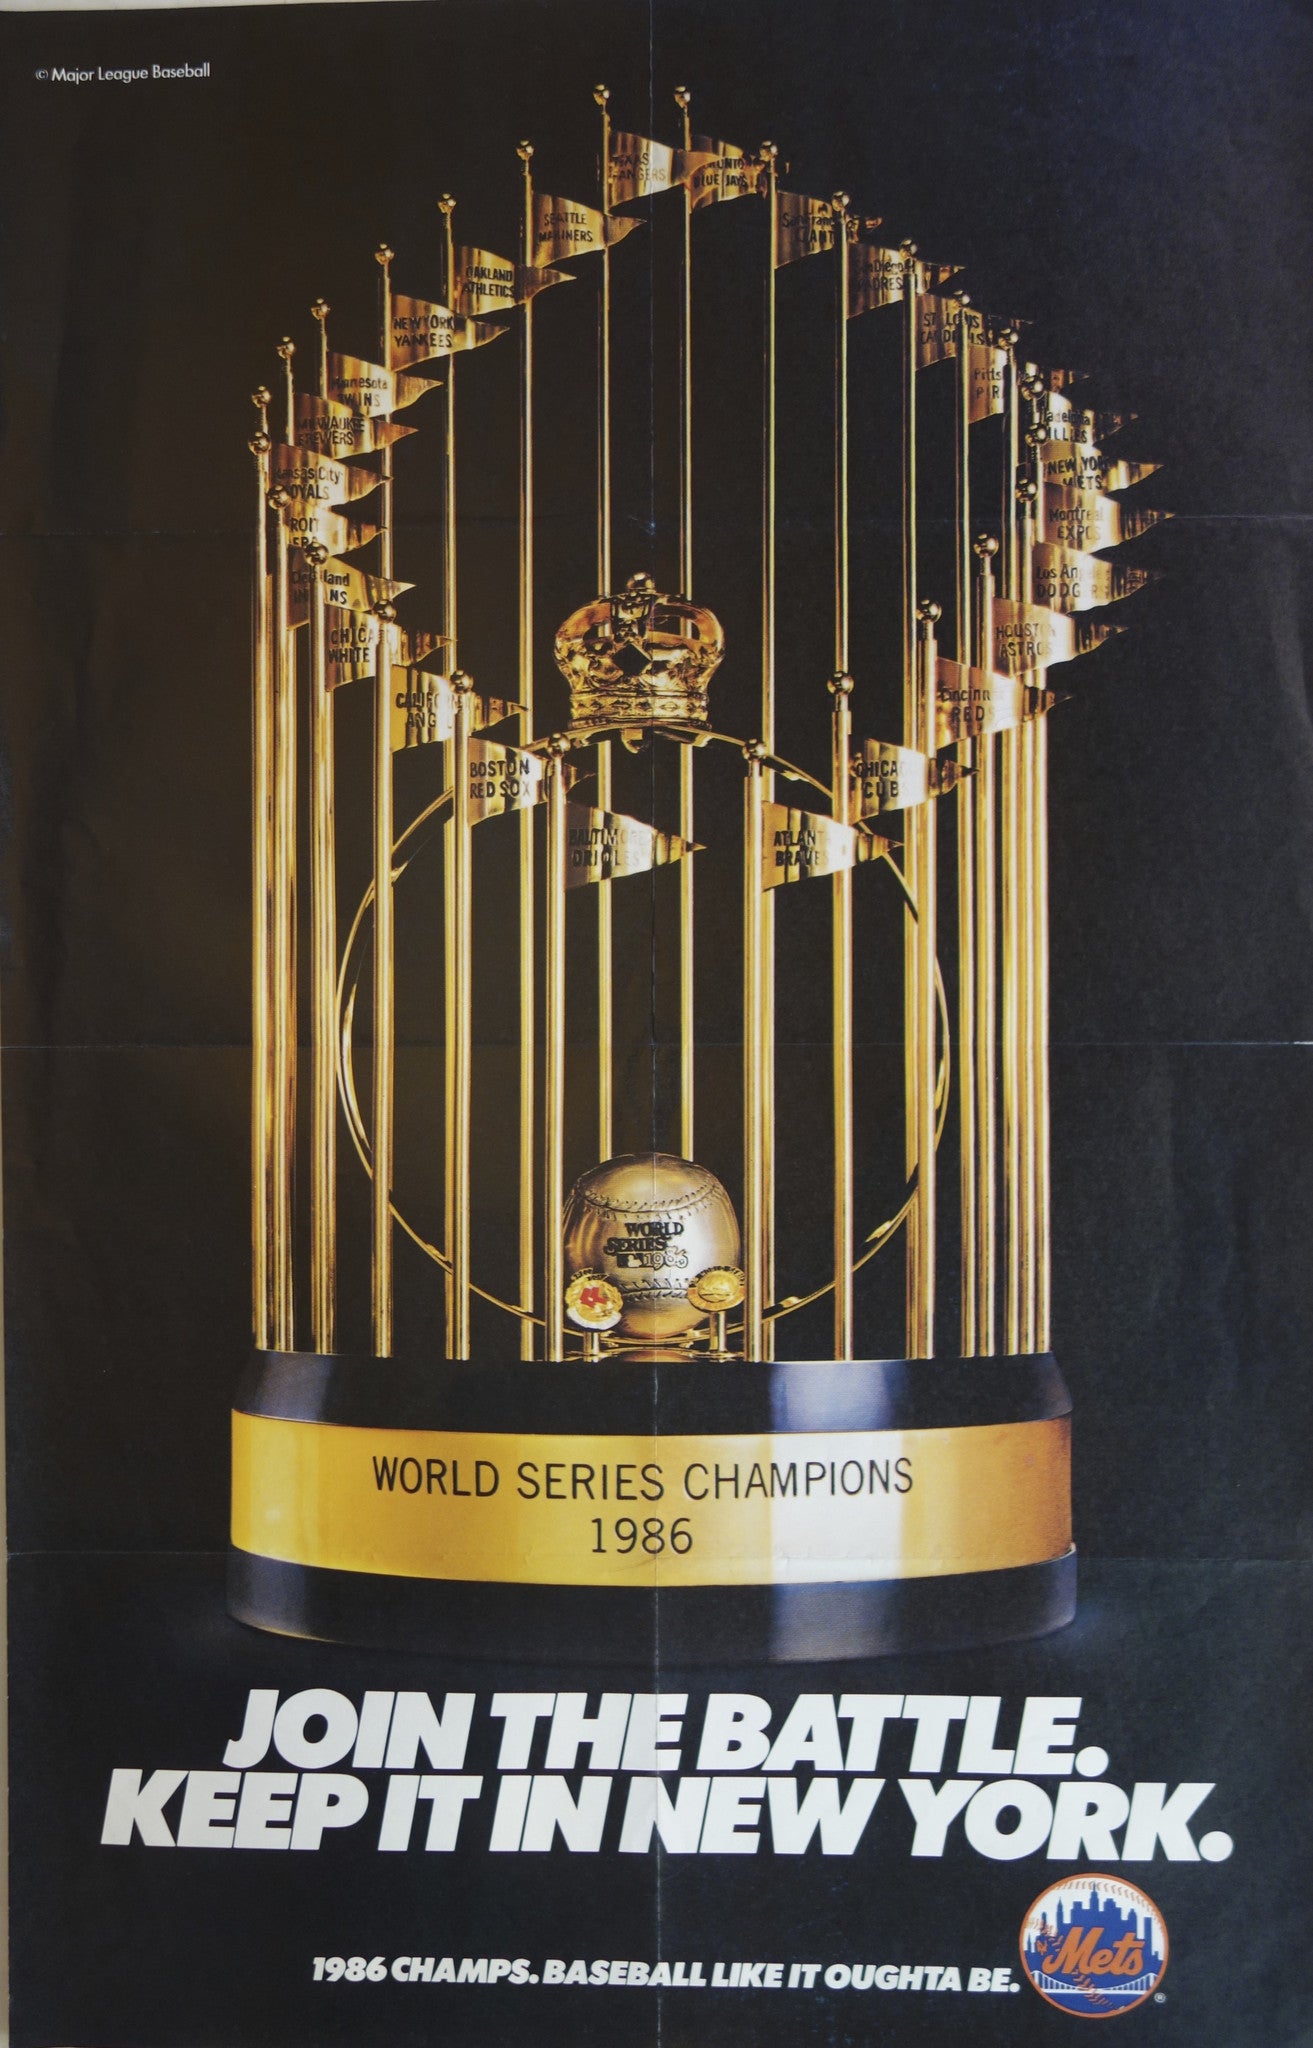 1986 New York Mets World Series Trophy (12'')